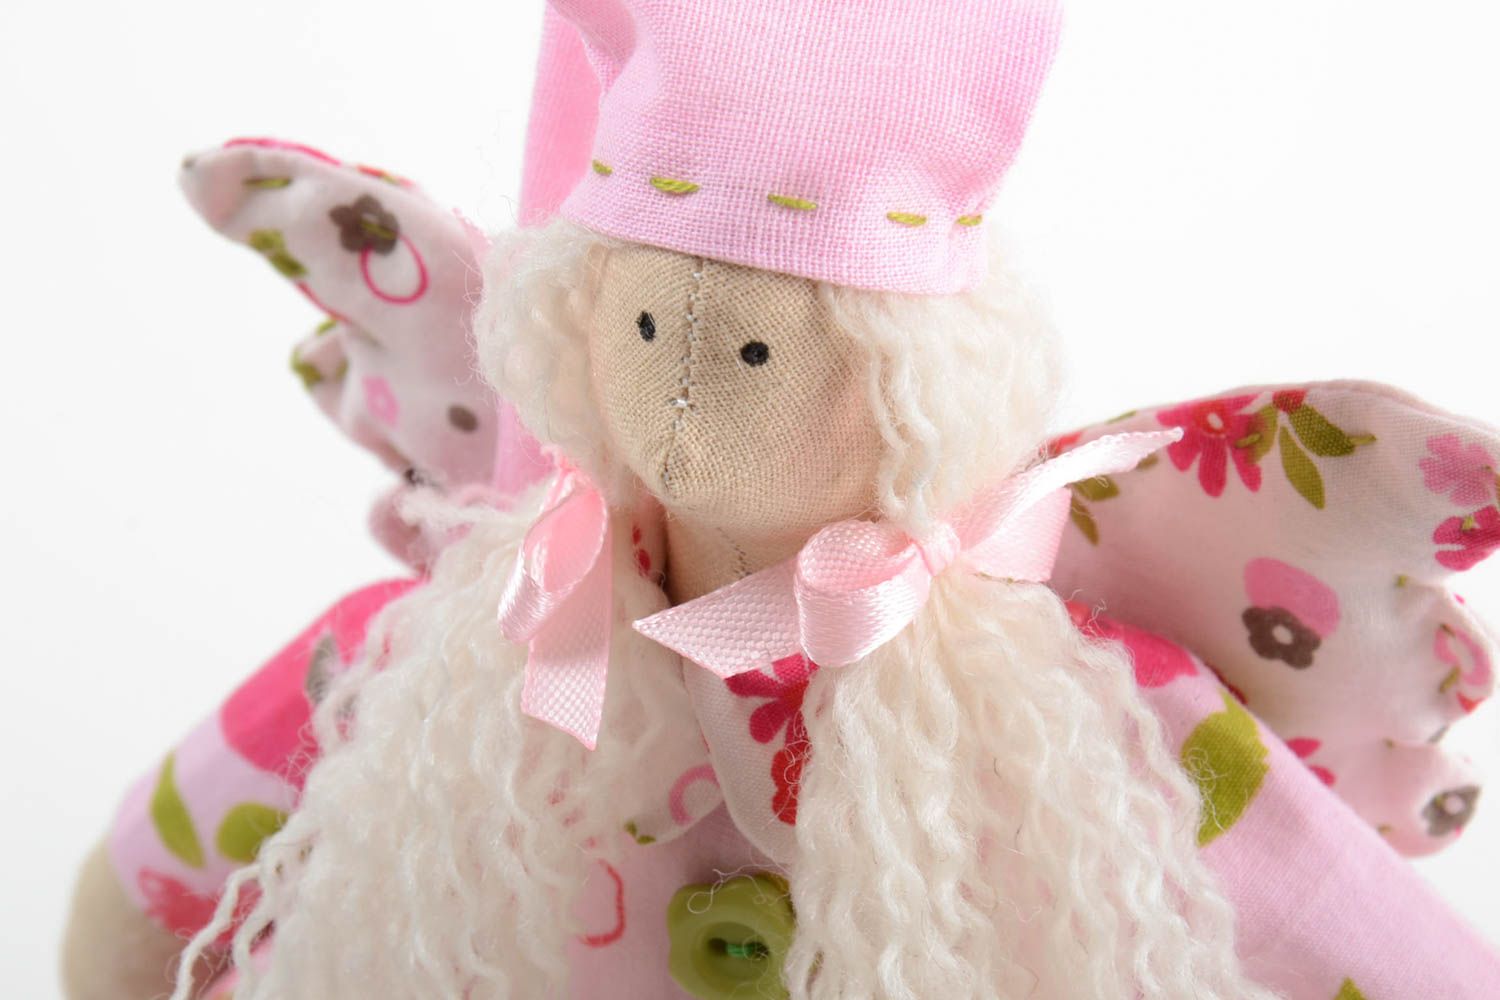 Beautiful handmade interior doll fabric soft toy rag doll designs gift ideas photo 3